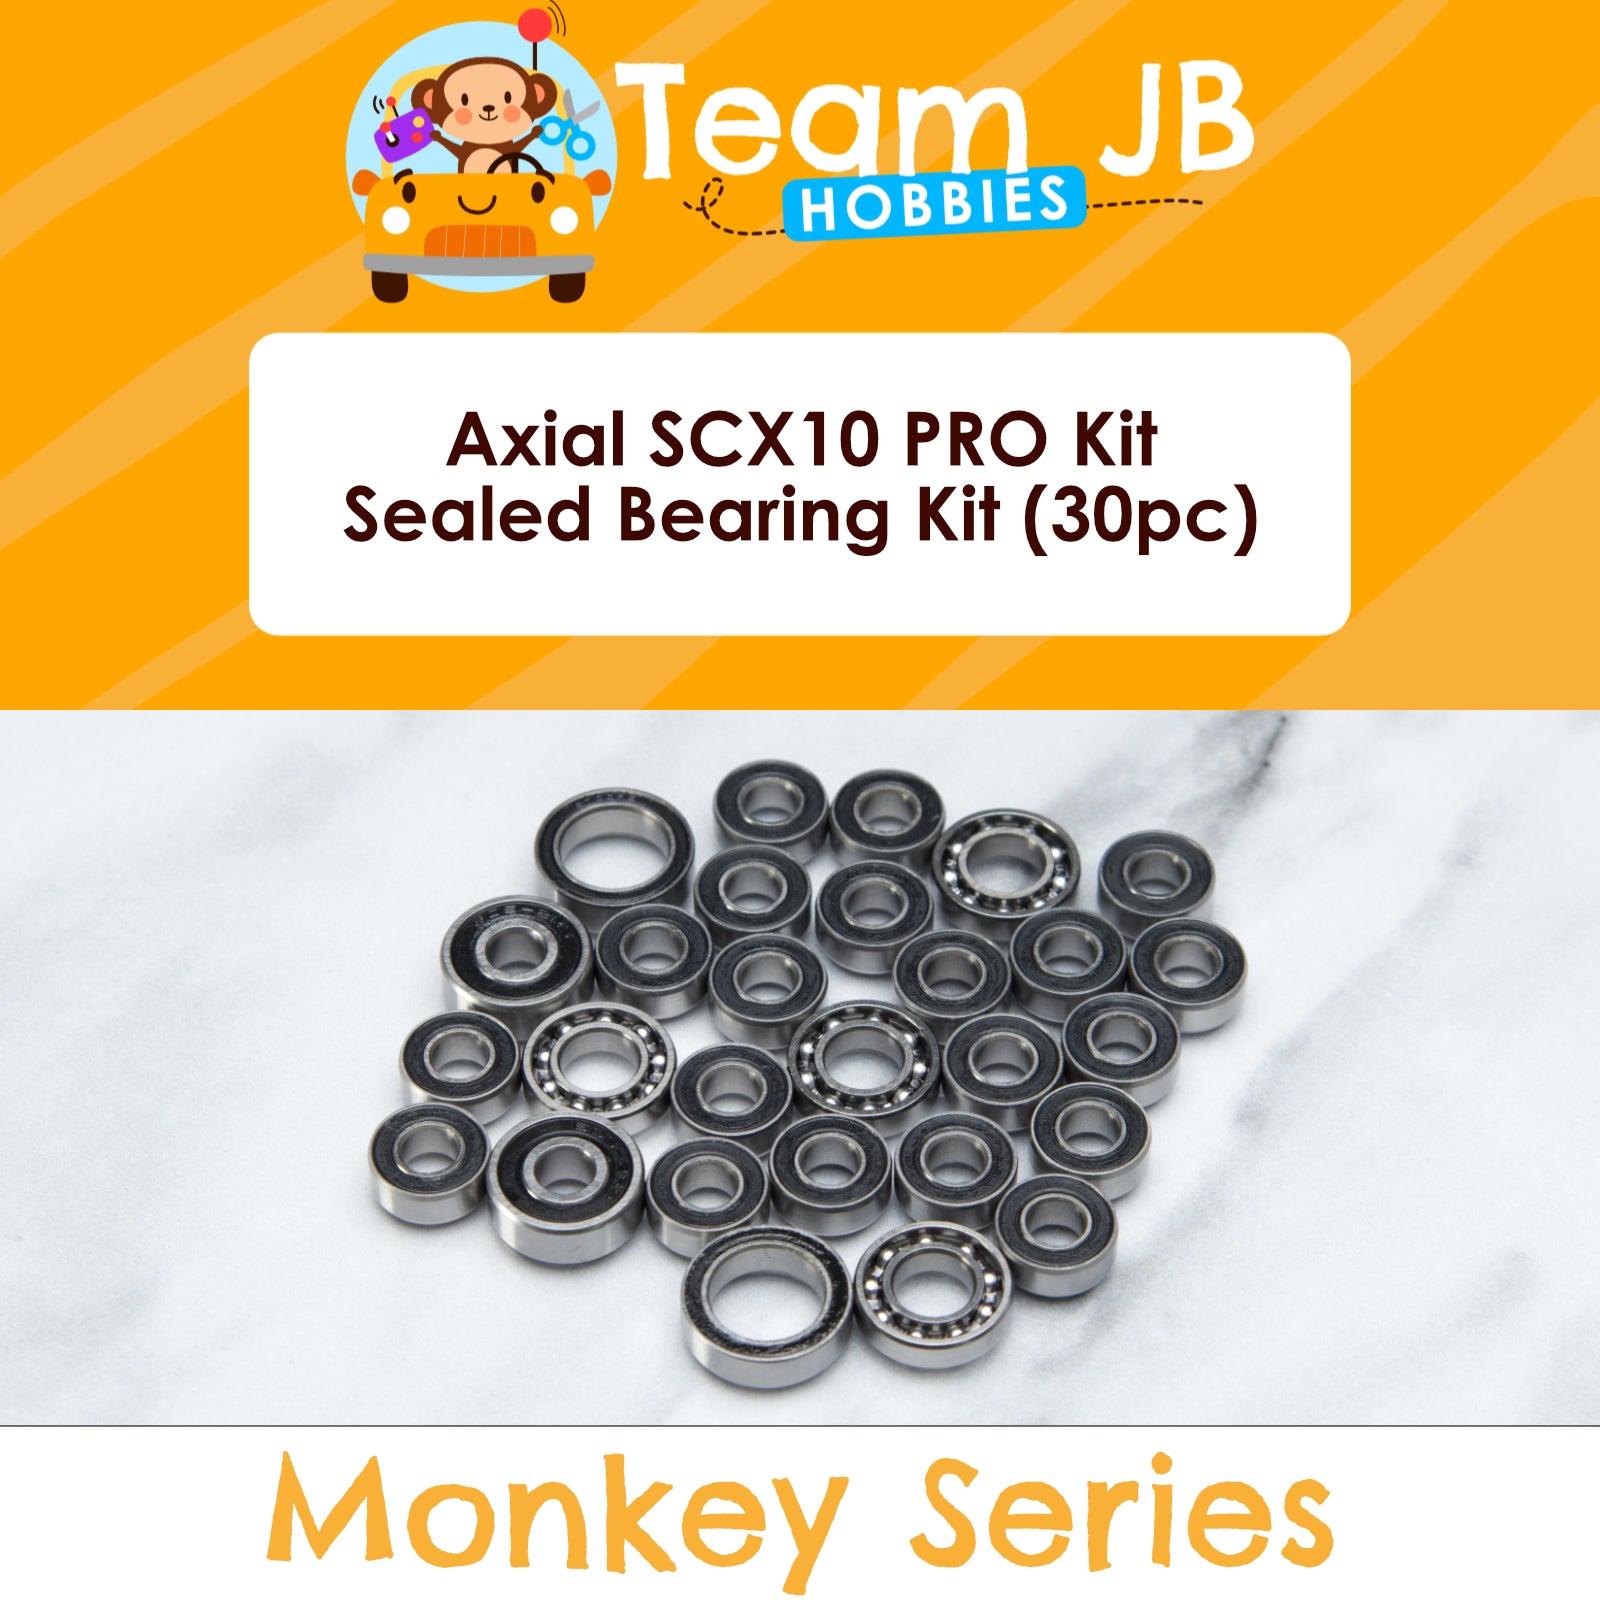 Axial SCX10 PRO Kit - Sealed Bearing Kit